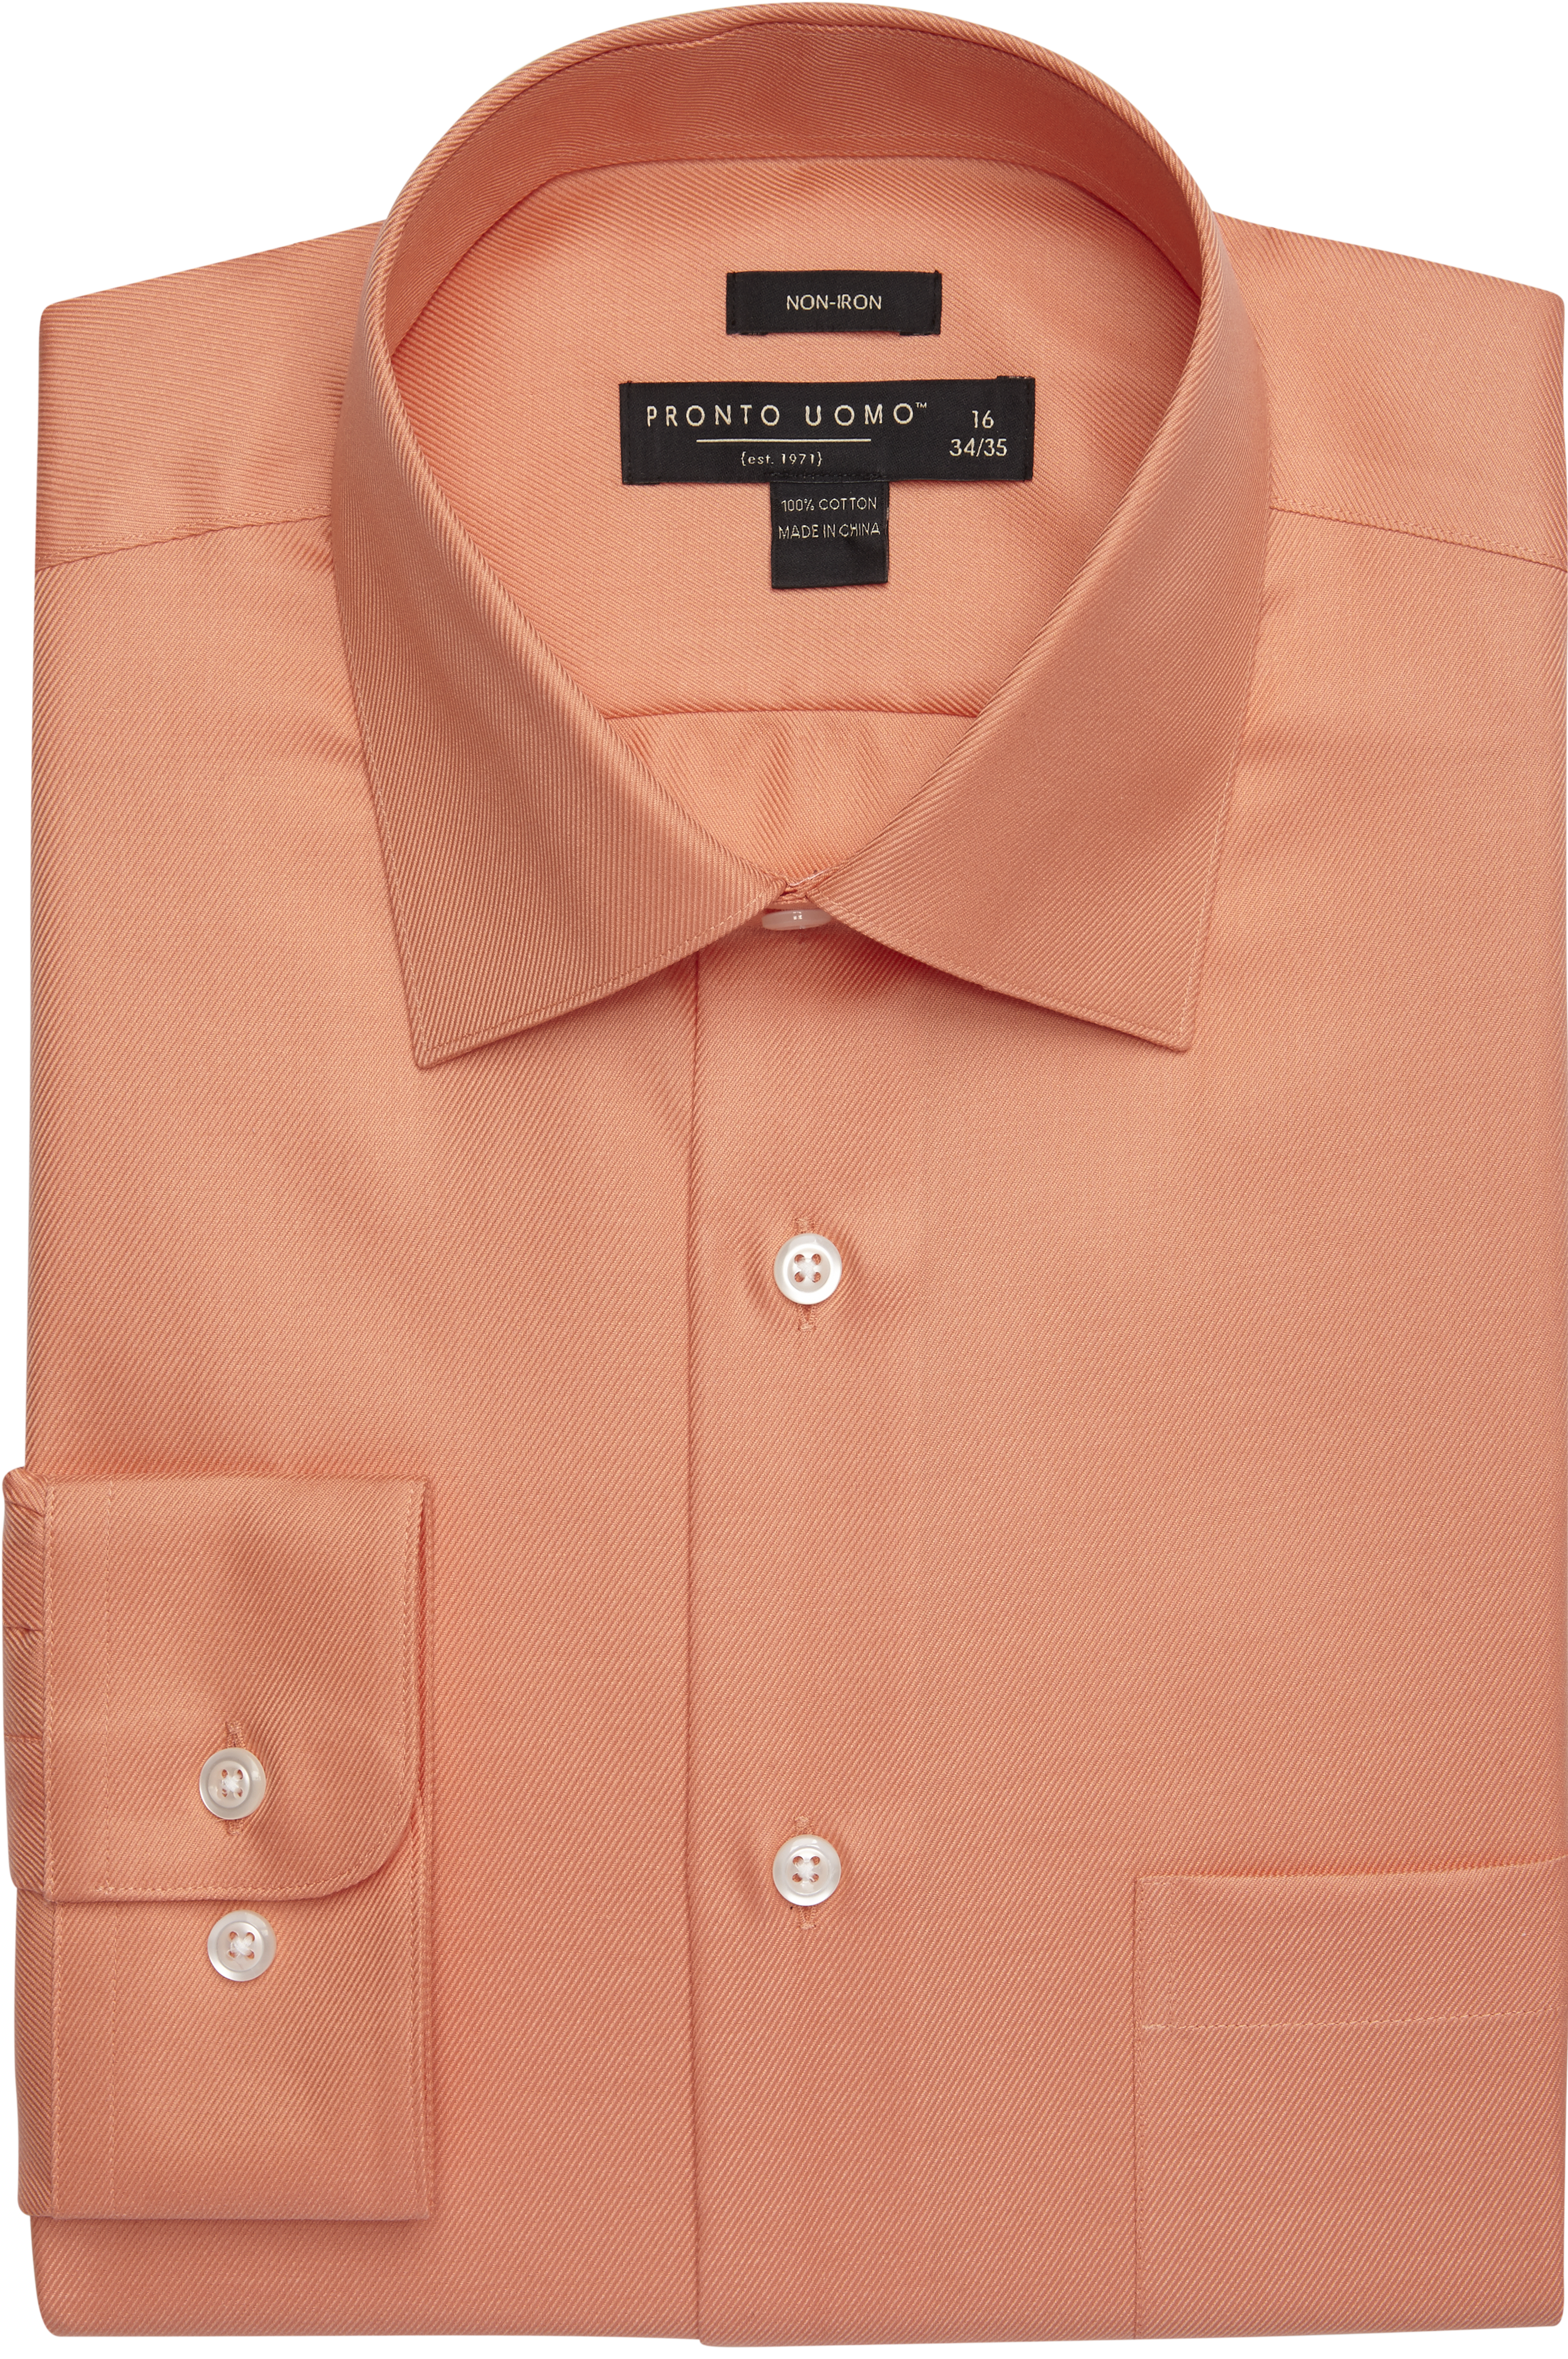 Mens Orange Dress Shirt | Men's Wearhouse